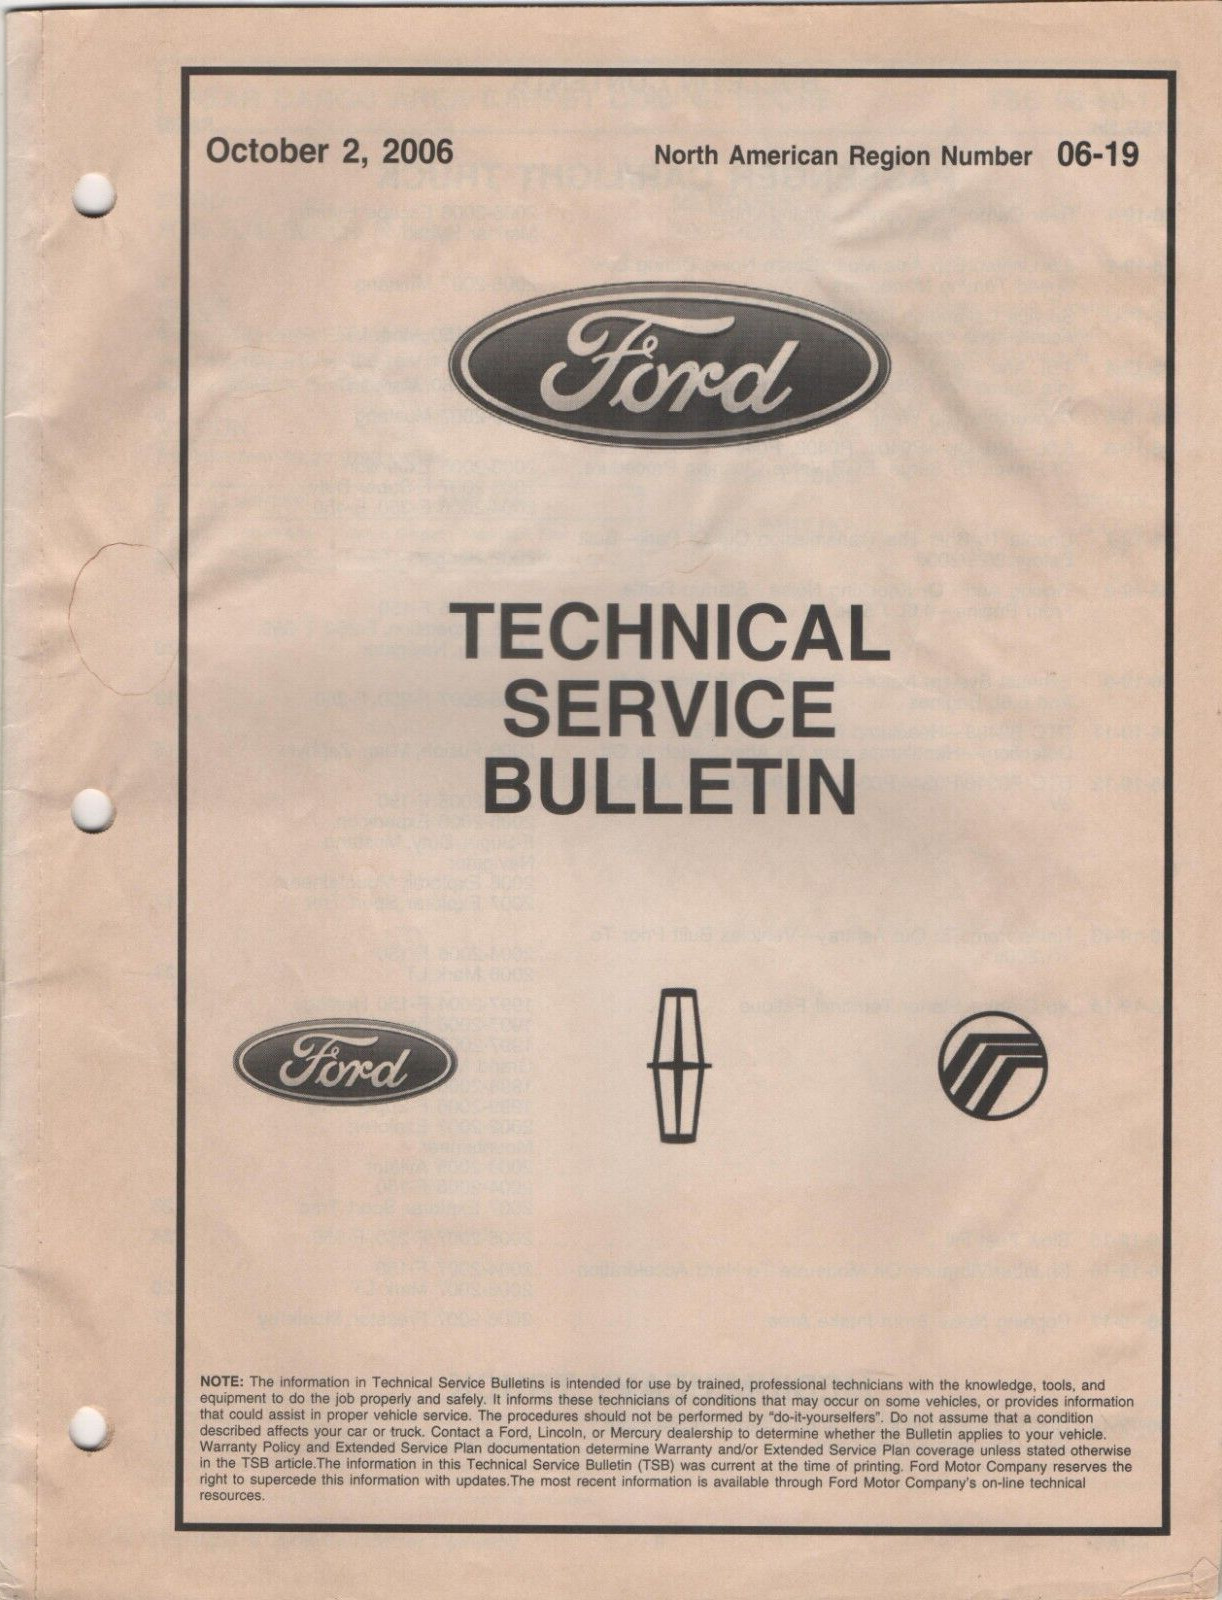 Ford Technical Service Bulletin October 2, 06 North American Region 06-19 Tranny